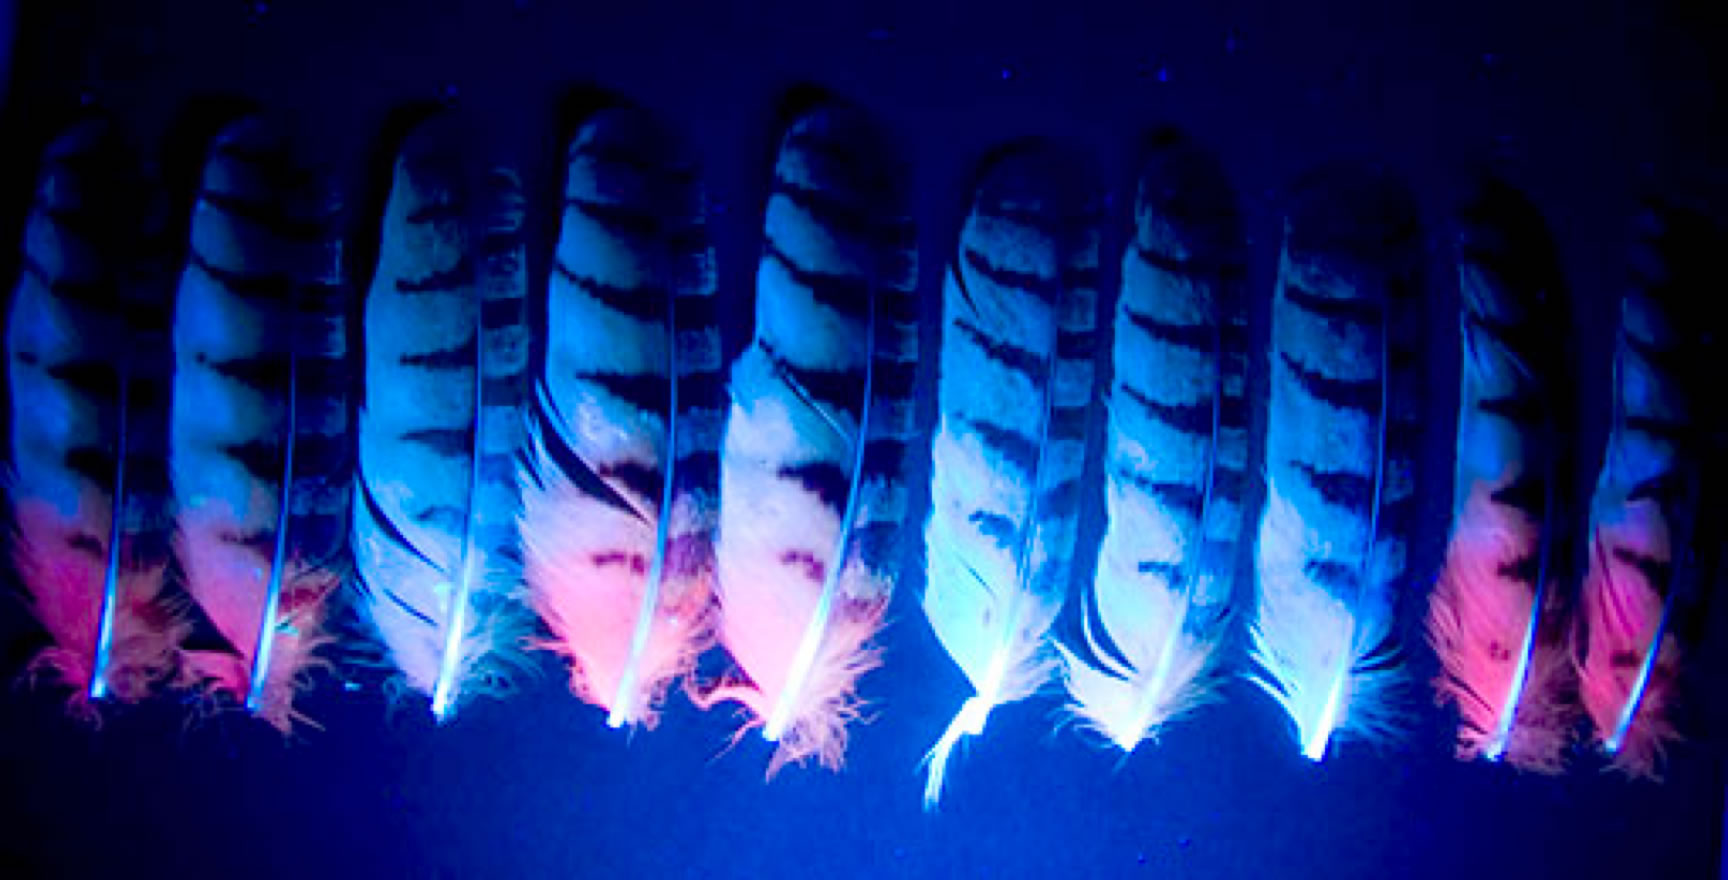 owl feathers glowing under UV light